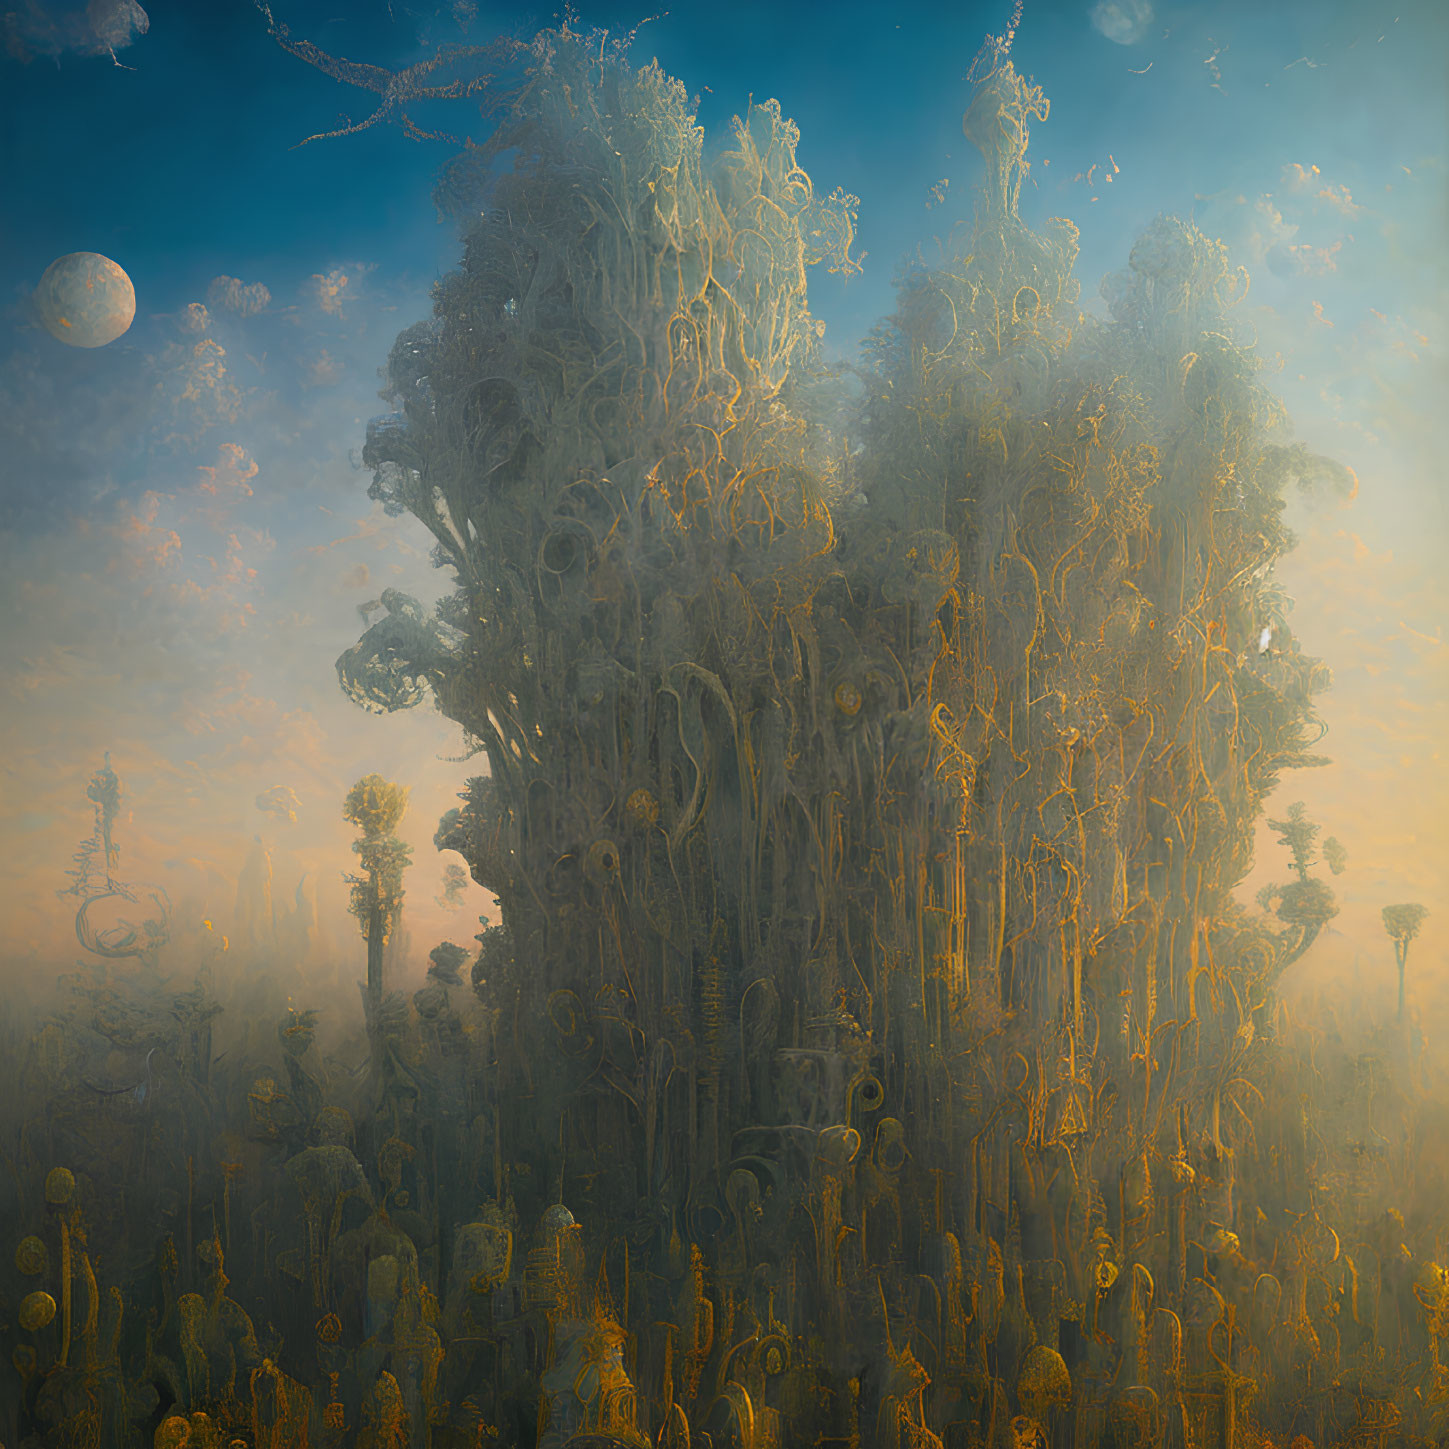 Enchanting golden mist forest with celestial sky